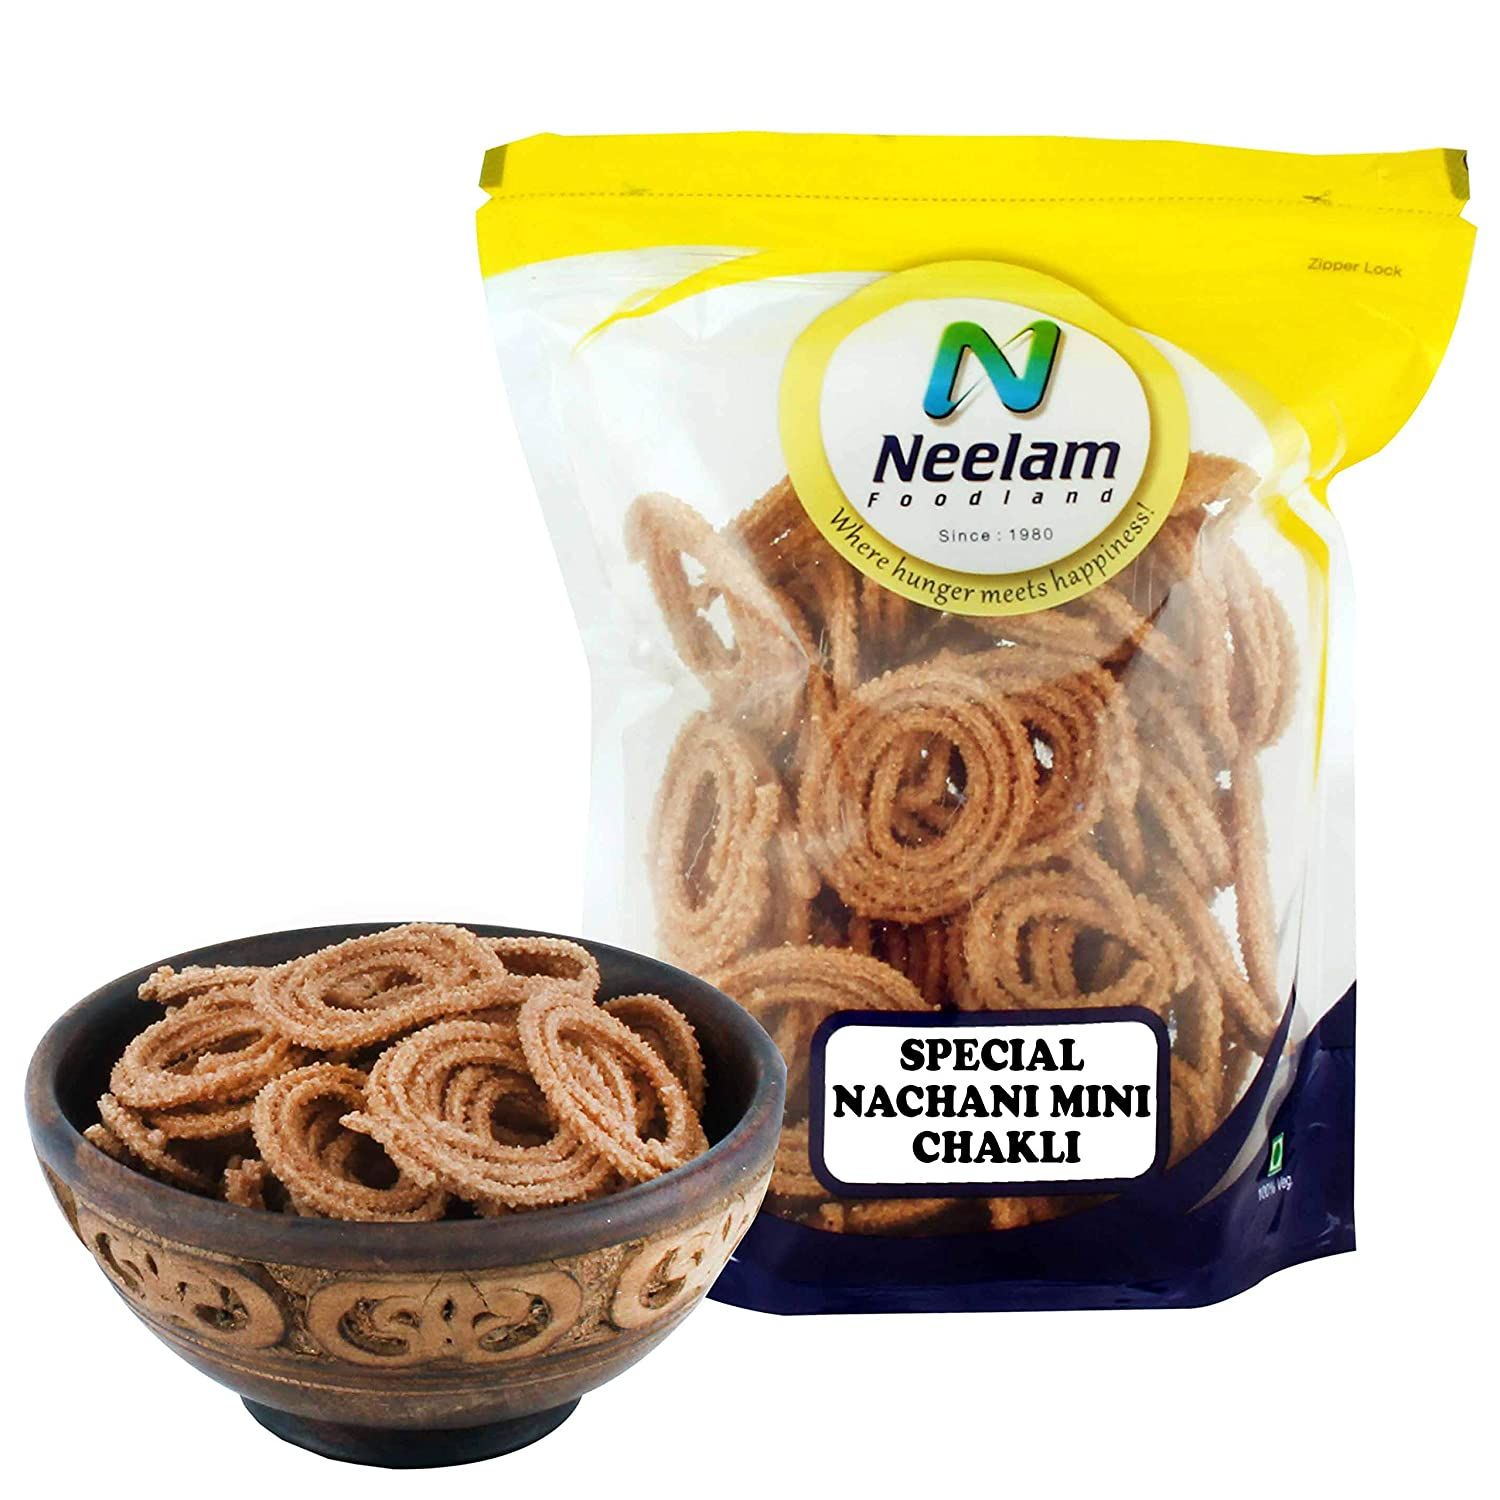 Neelam Foodland Special Nachani Mini Chakli Image